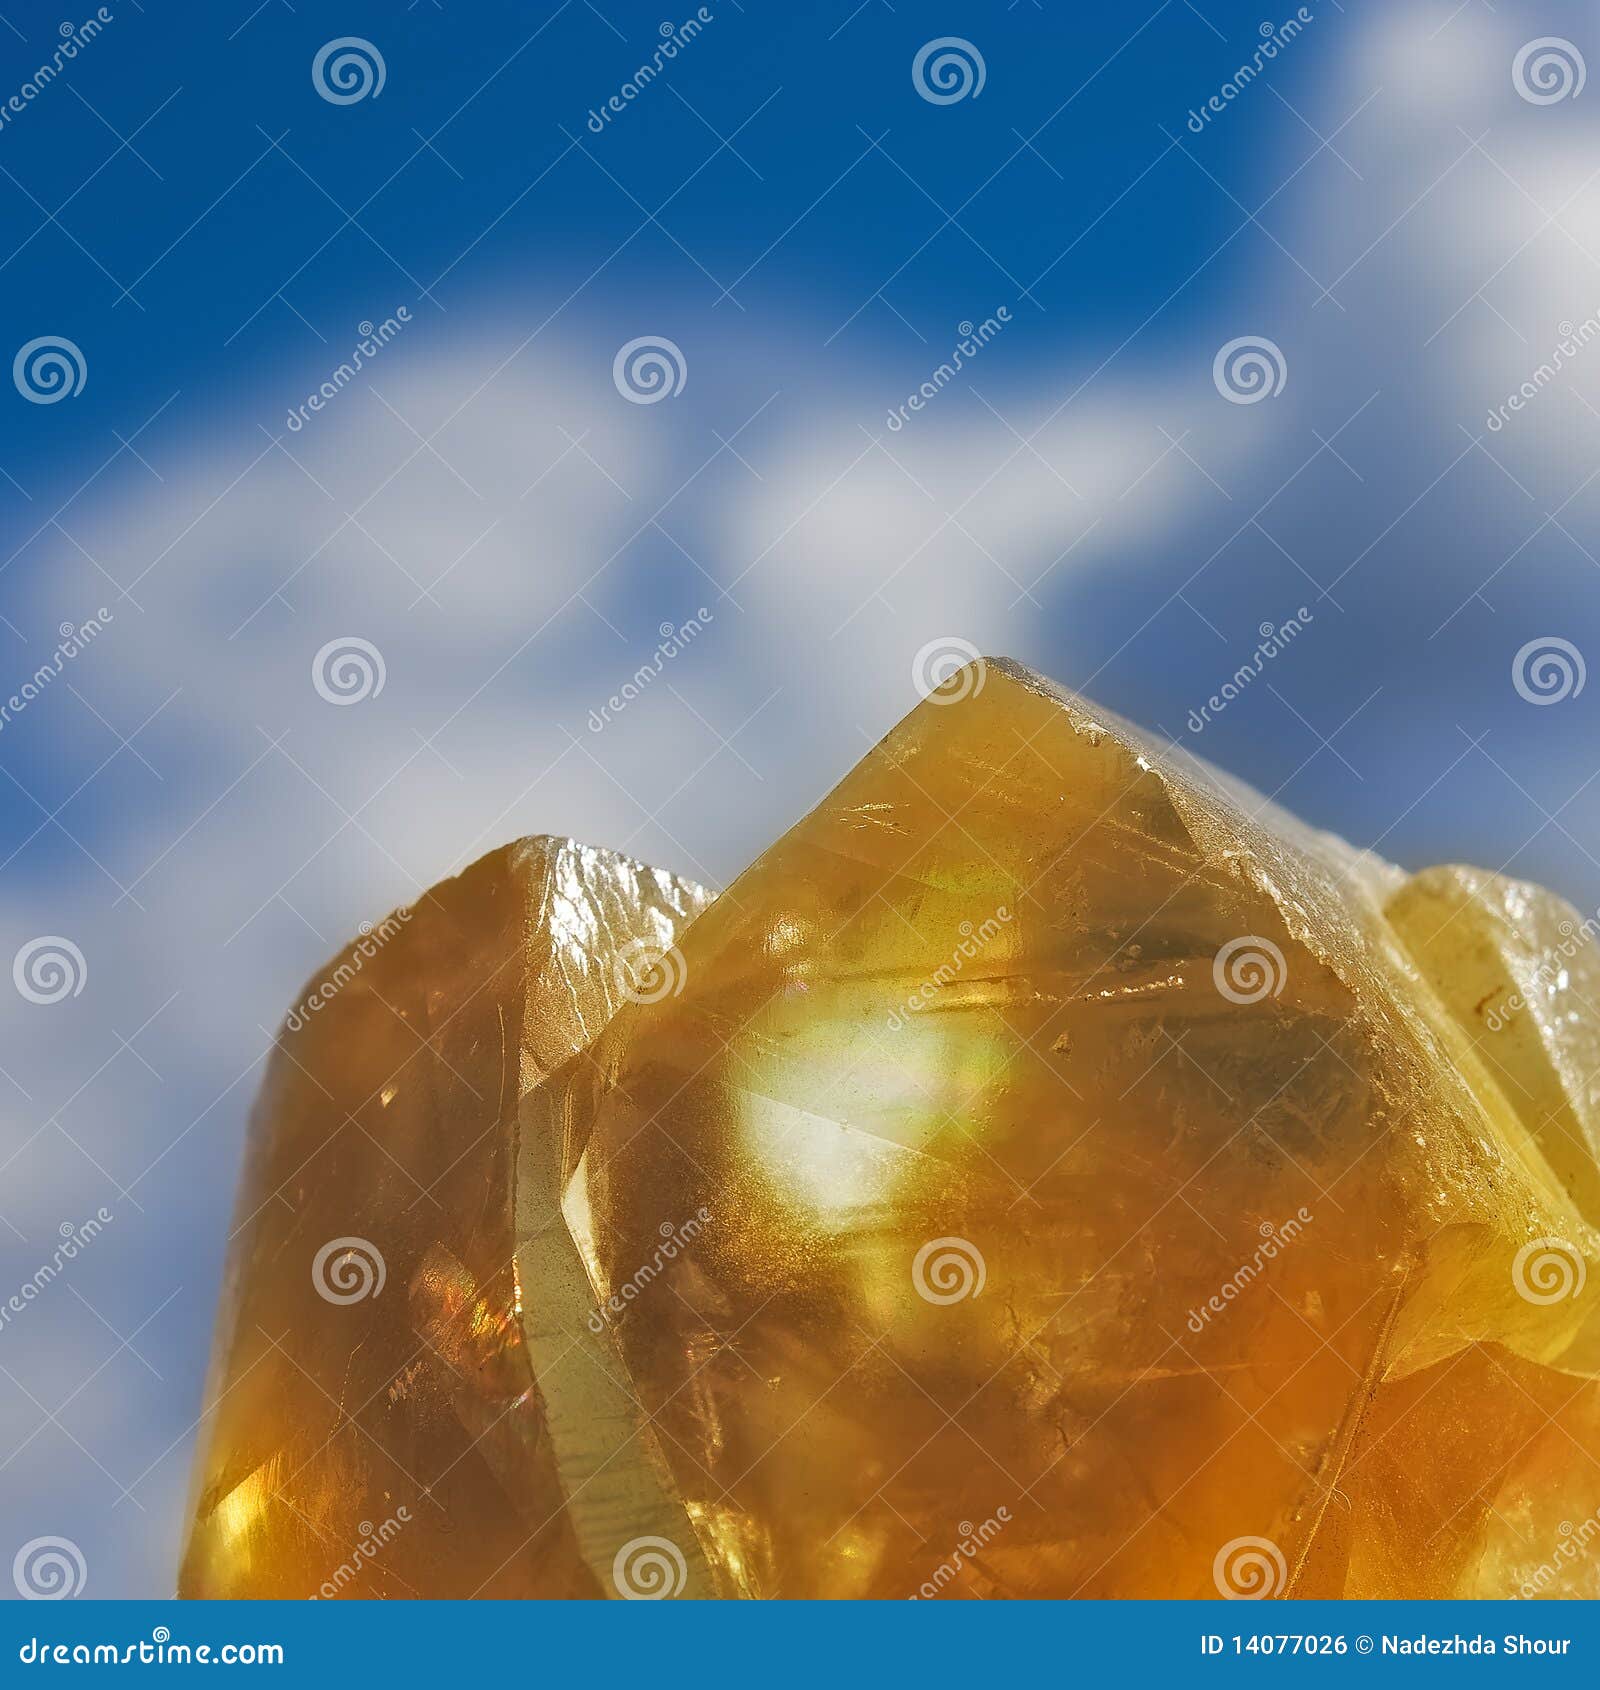 orange crystalls on blue sky background